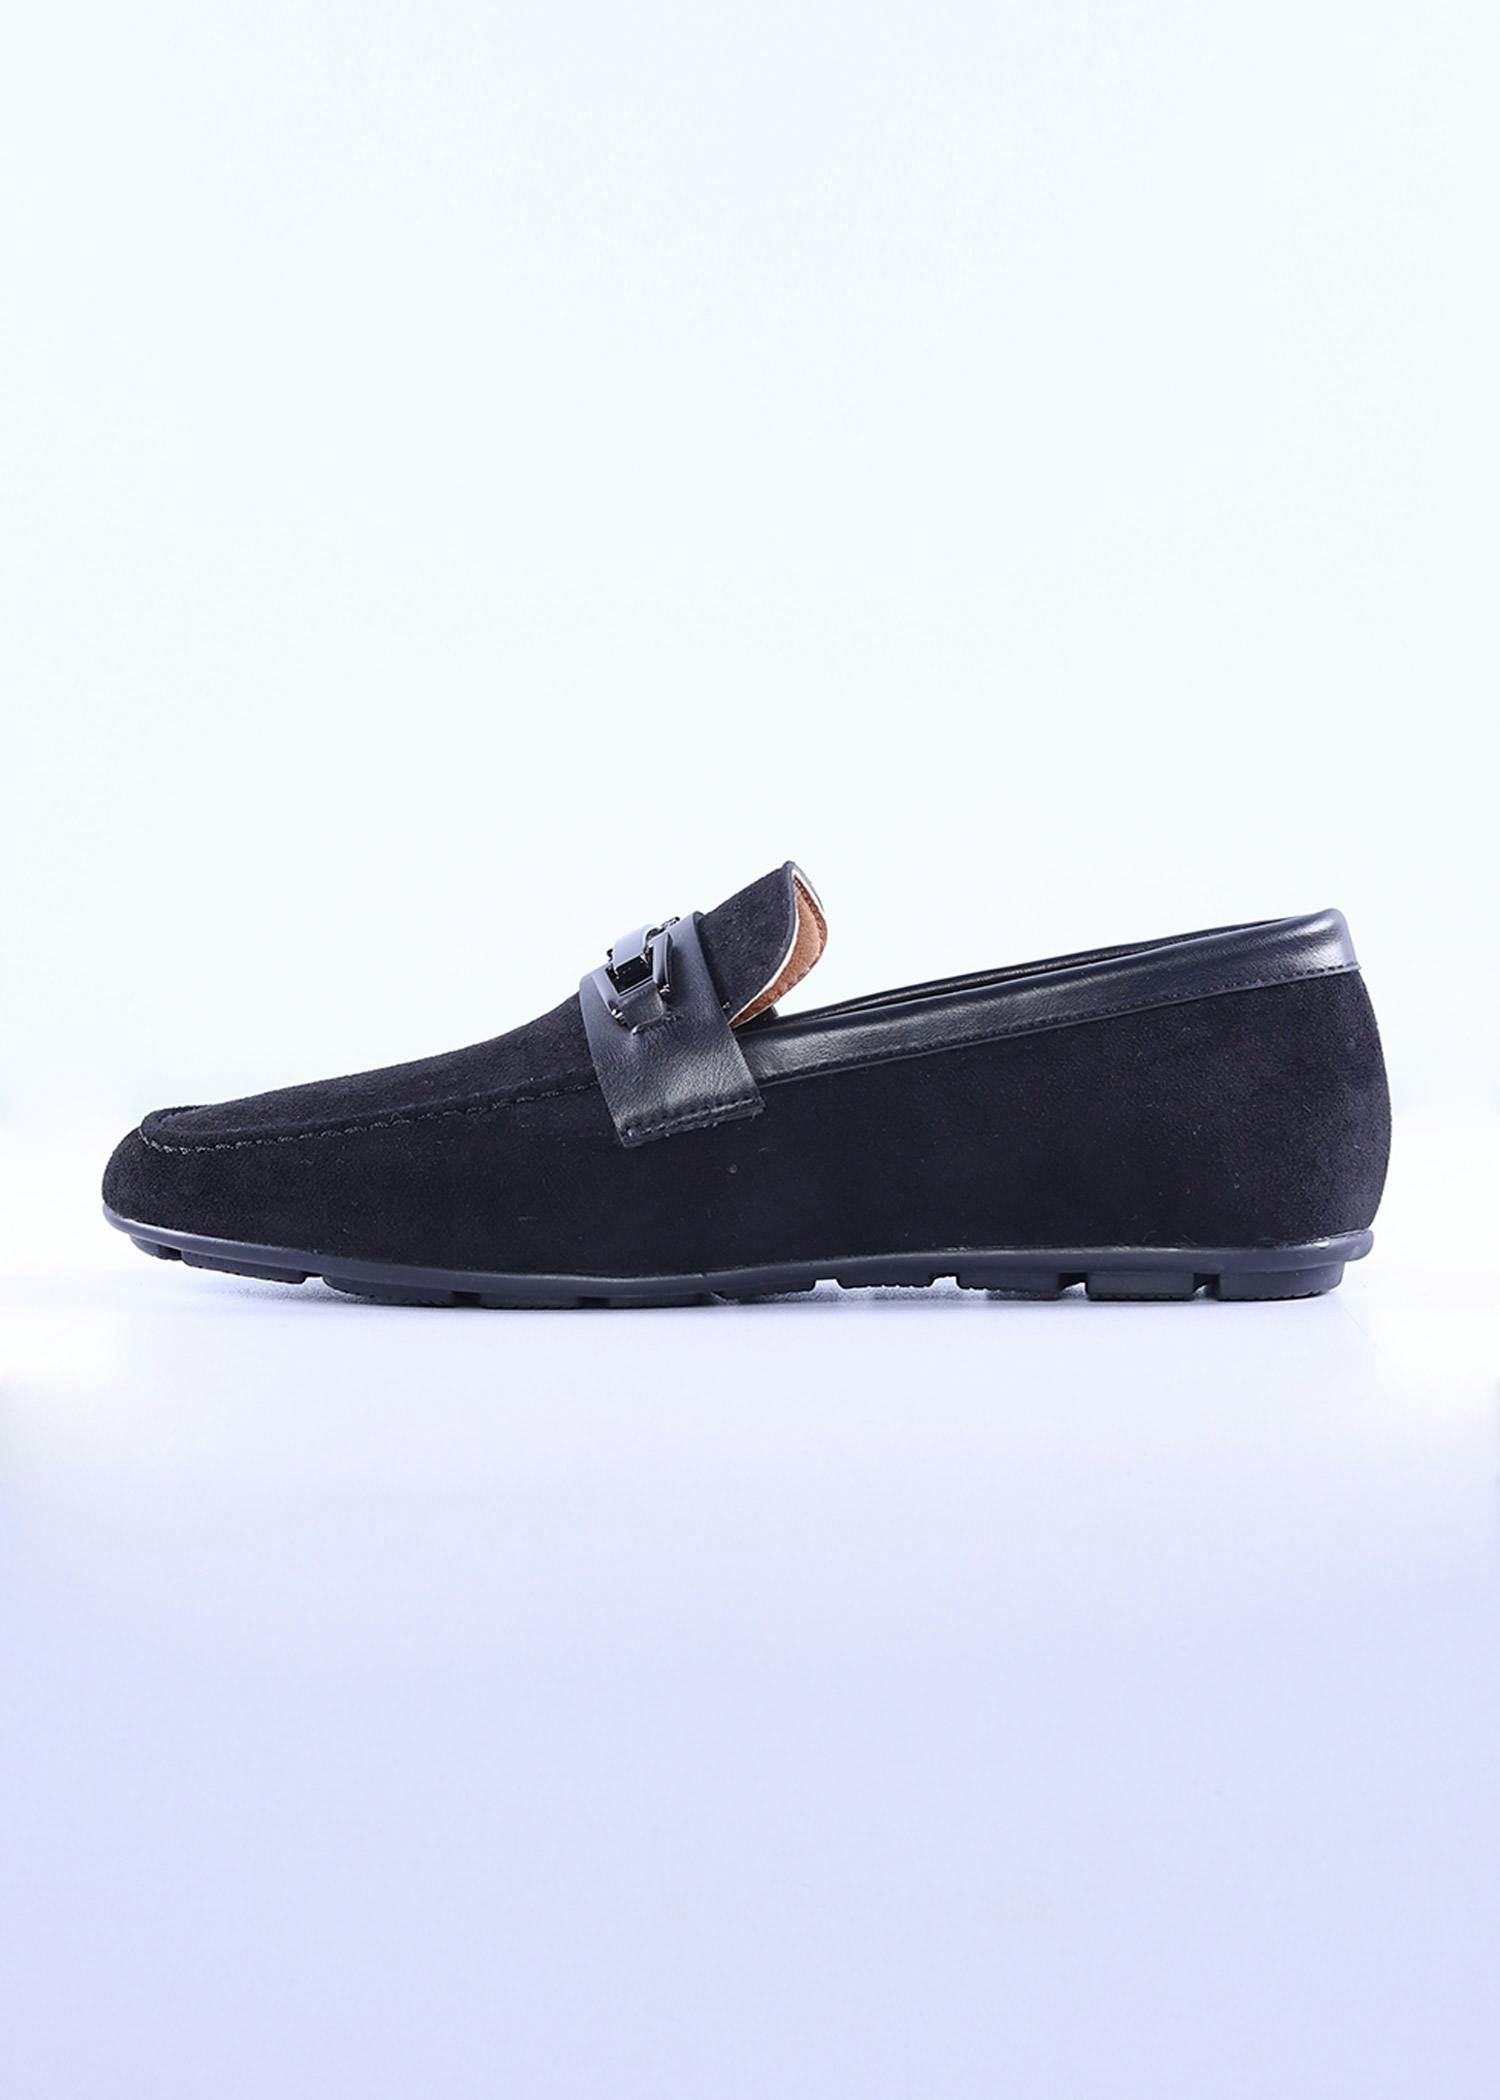 tagus mens shoes black color cover